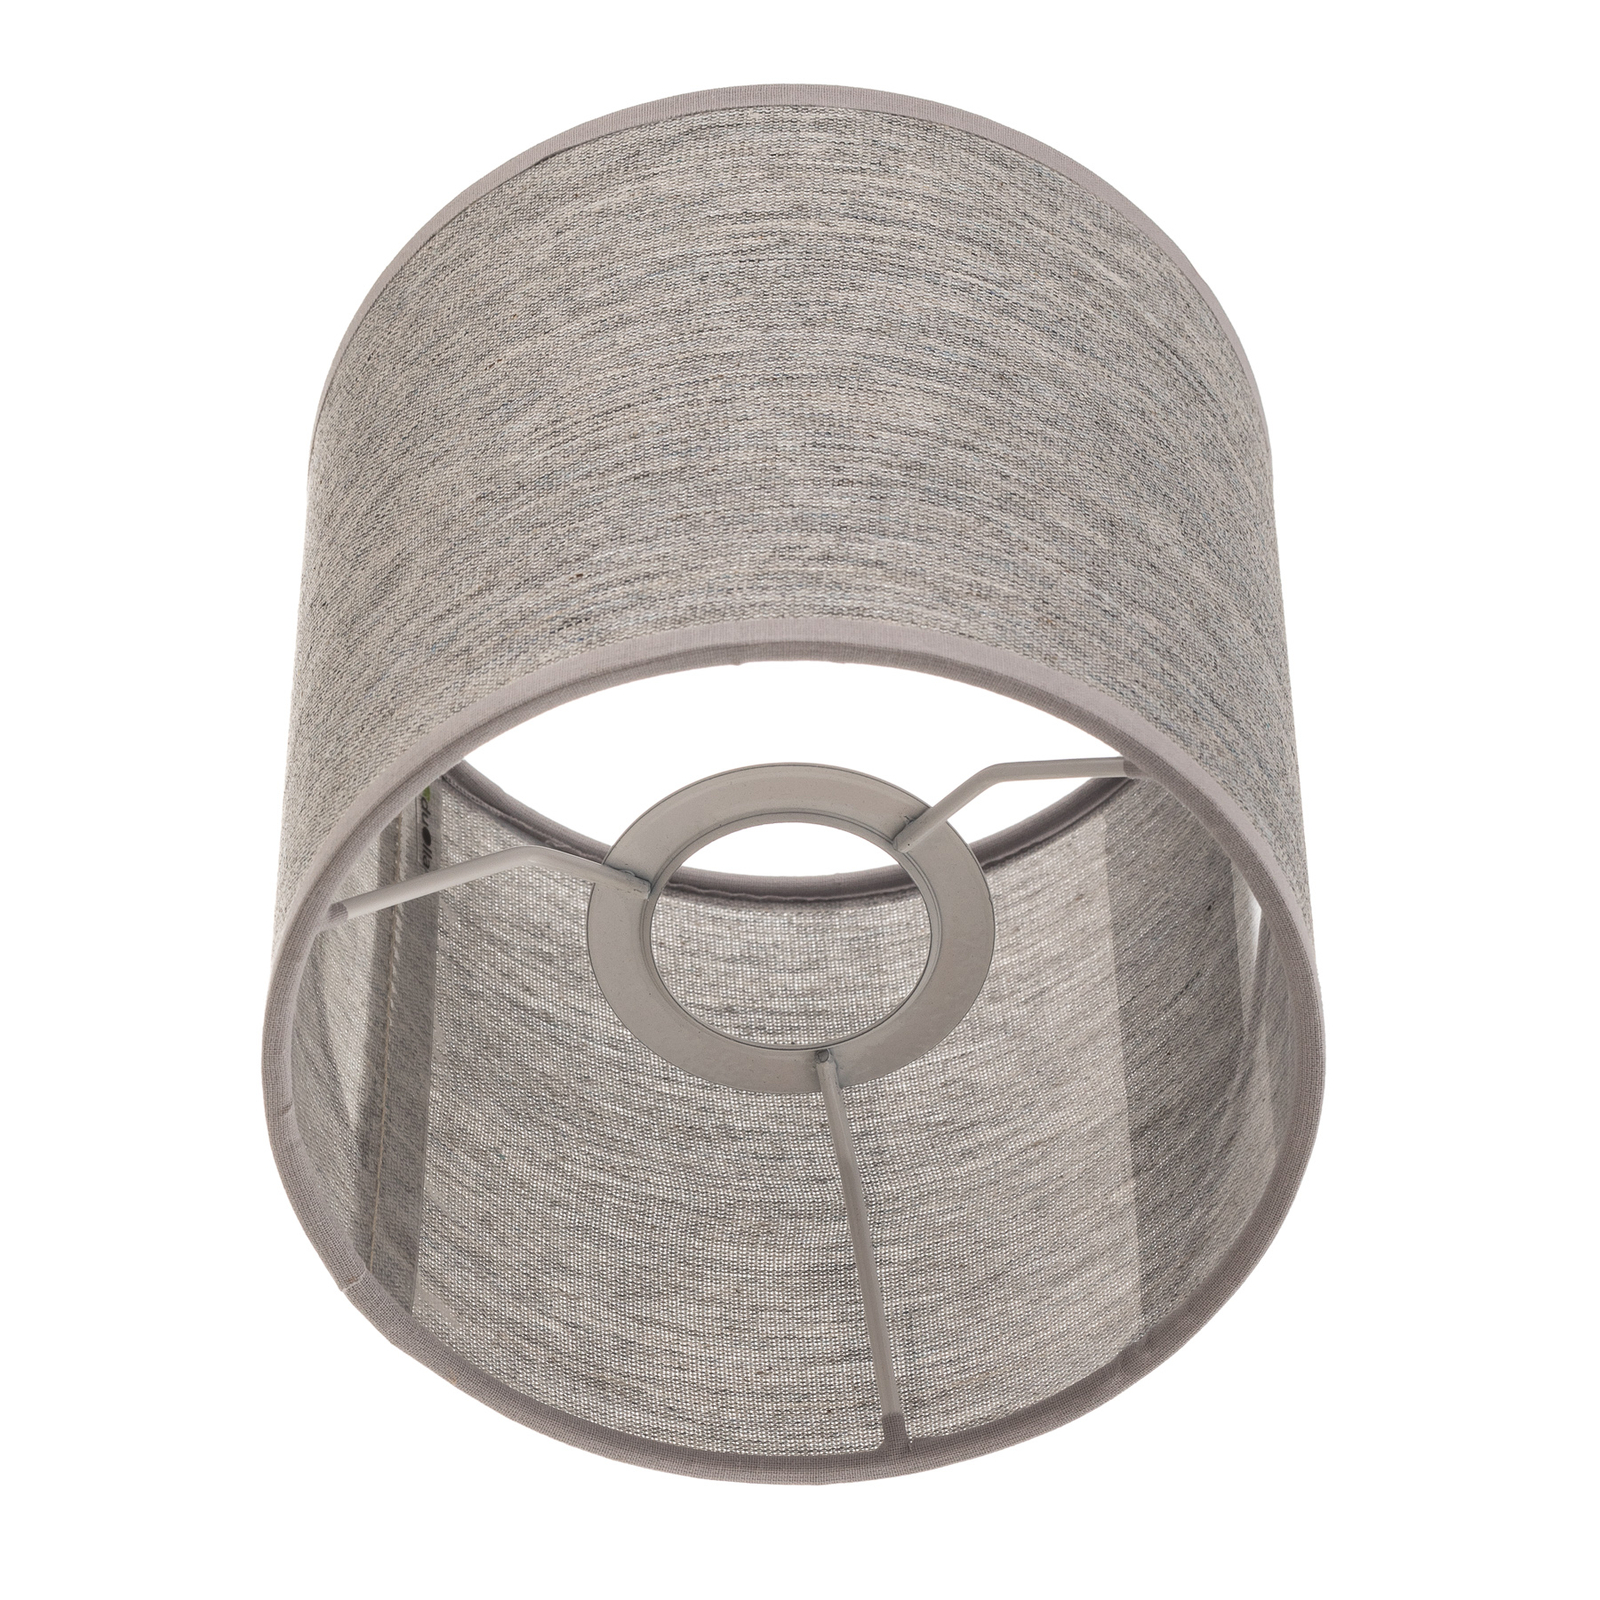 Roller lampshade, grey, Ø 15 cm, height 15 cm